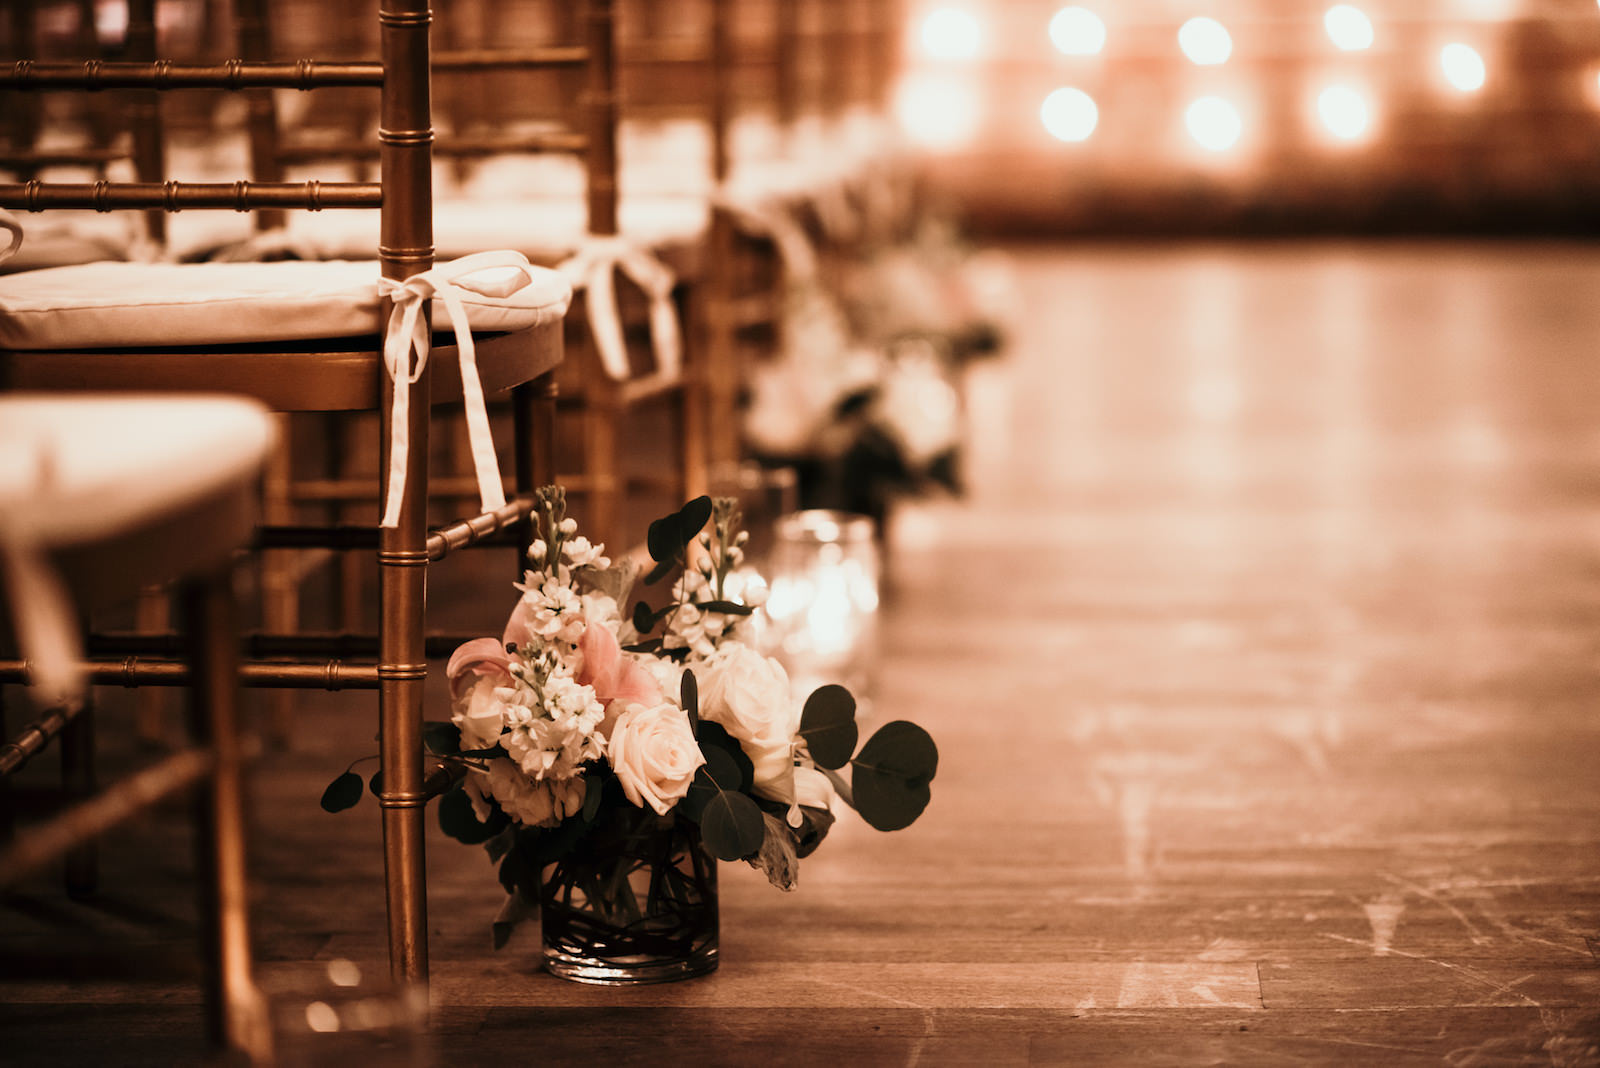 Romantic Wedding Ceremony Decor, Small Floral Arrangements on Aisle, White Roses, Blush Pink Flowers, Baby's-breath, and Eucalyptus Leaves, Gold Chiavari Chairs | Florida Wedding Venue NOVA 535